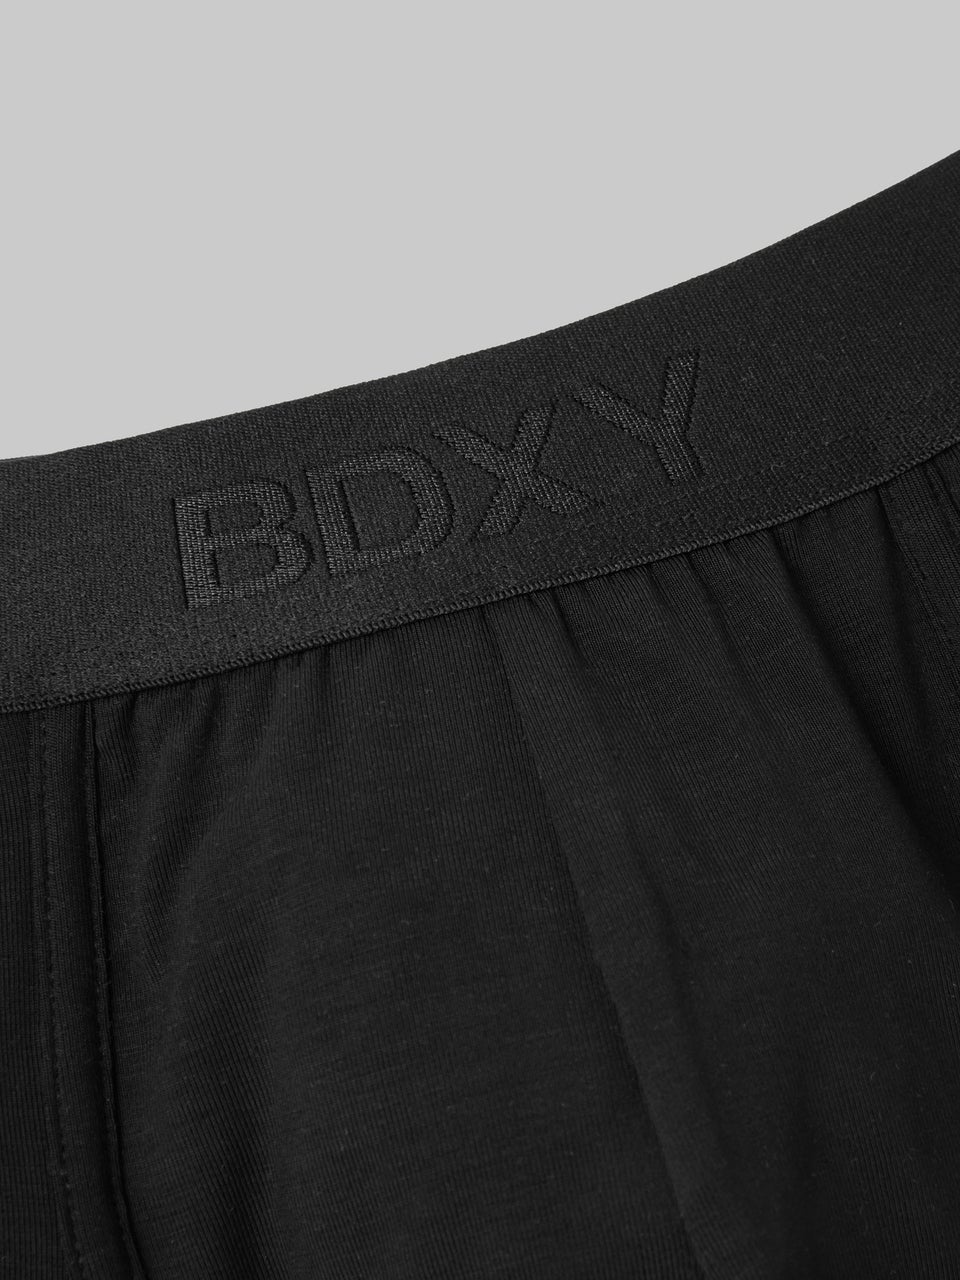 'The Boom' Underwear Boxer Black